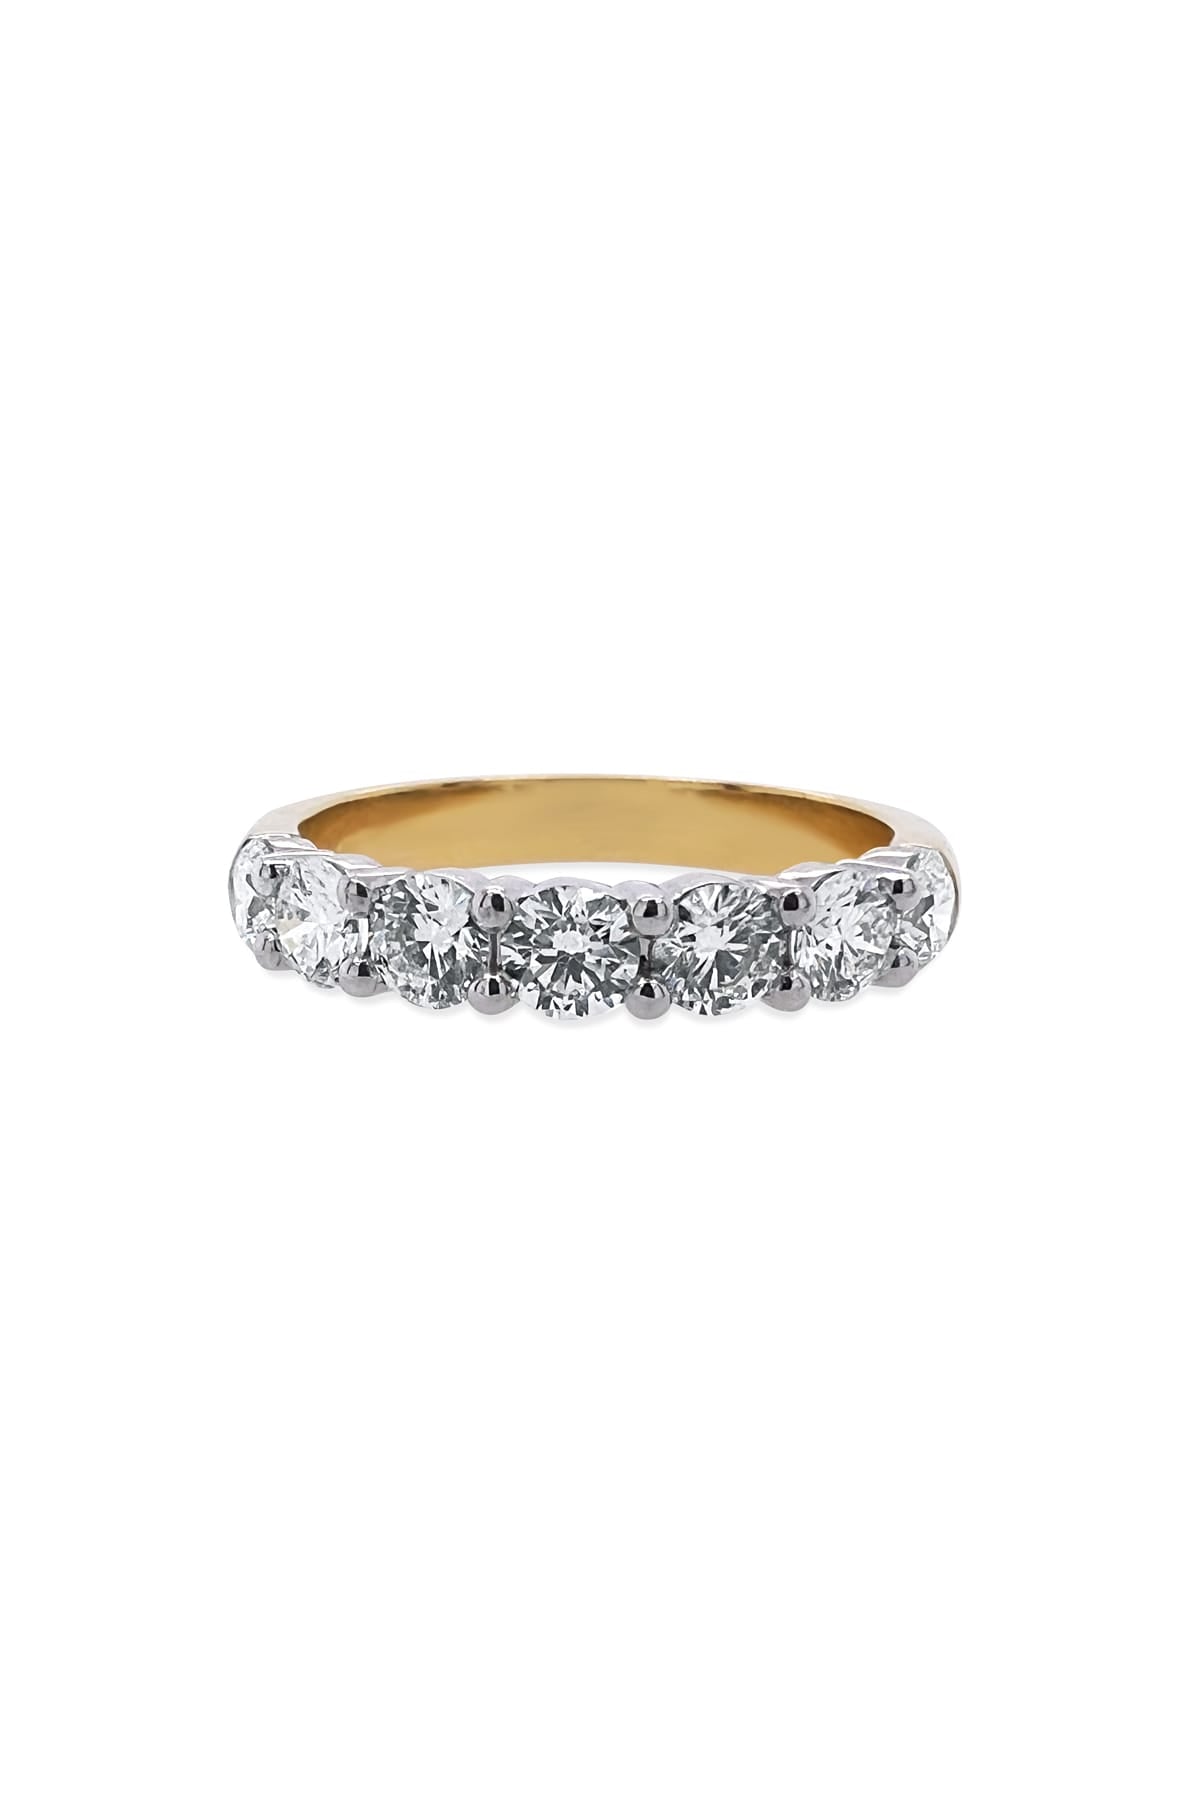 1.25 Carat Diamond Set Claw Set Wedder Ring  available at LeGassick Diamonds and Jewellery Gold Coast, Australia.